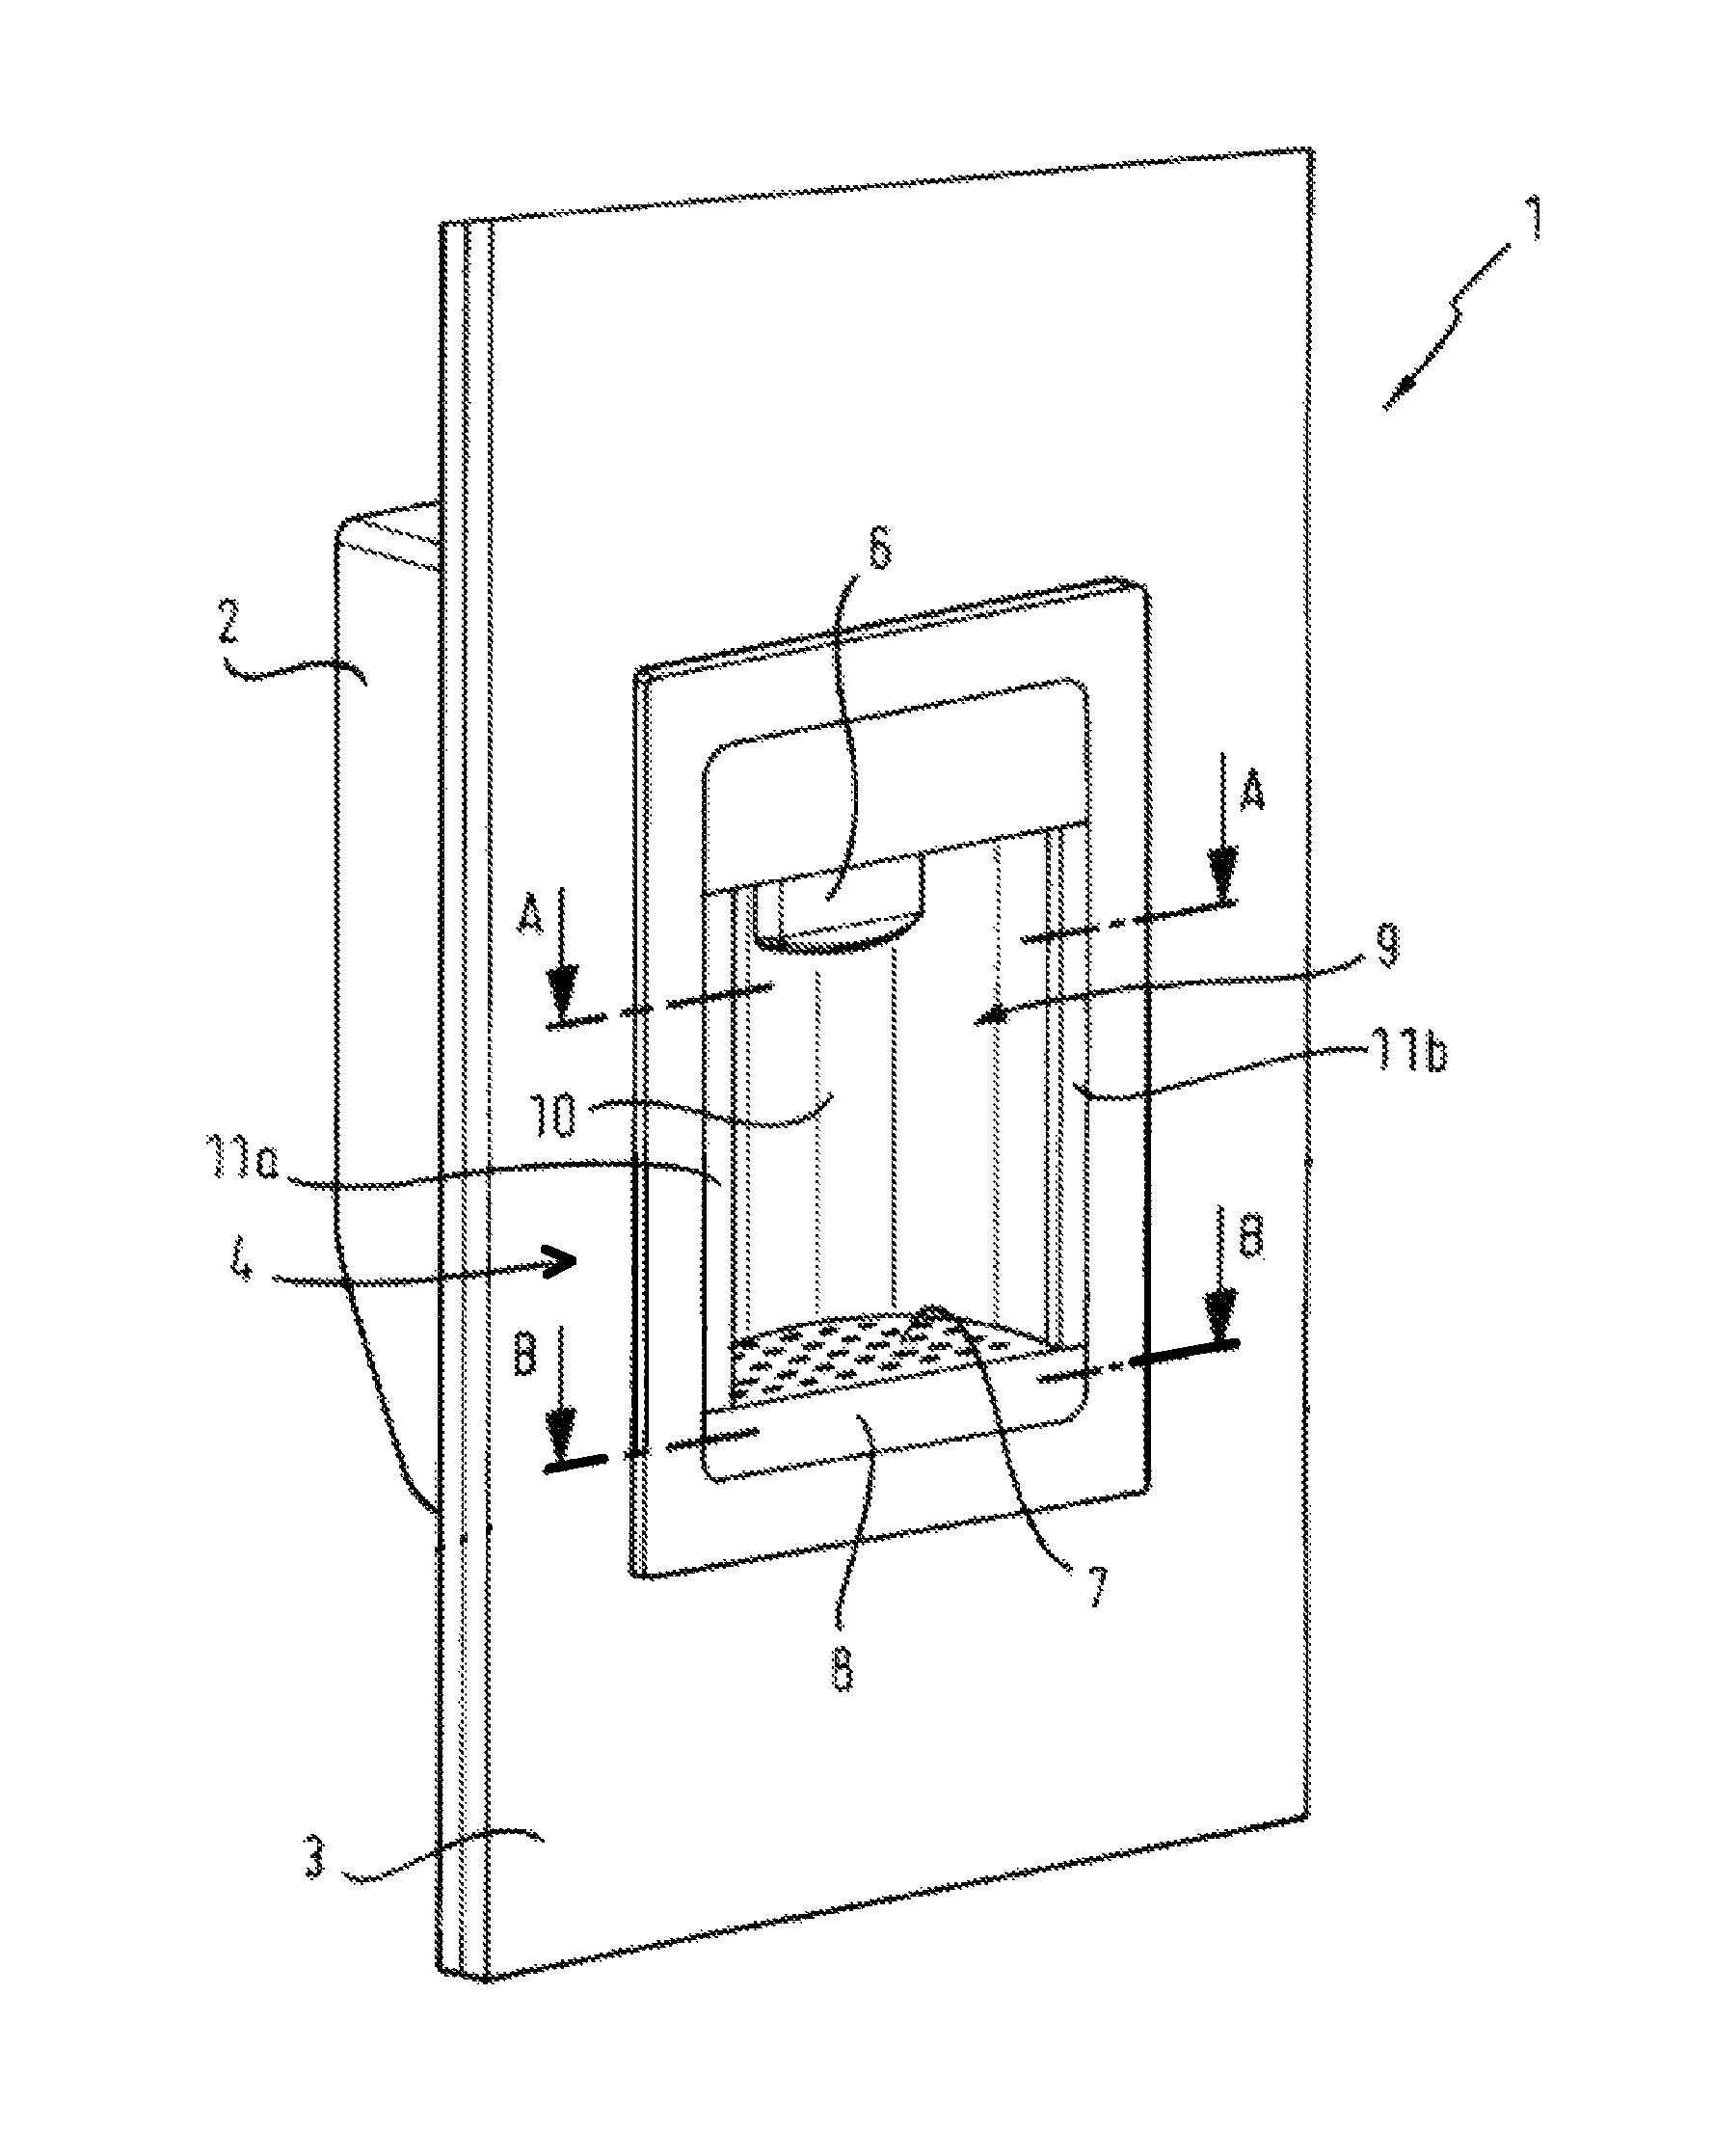 Output unit of a refrigeration device, refrigeration device and method for installing a refrigeration device